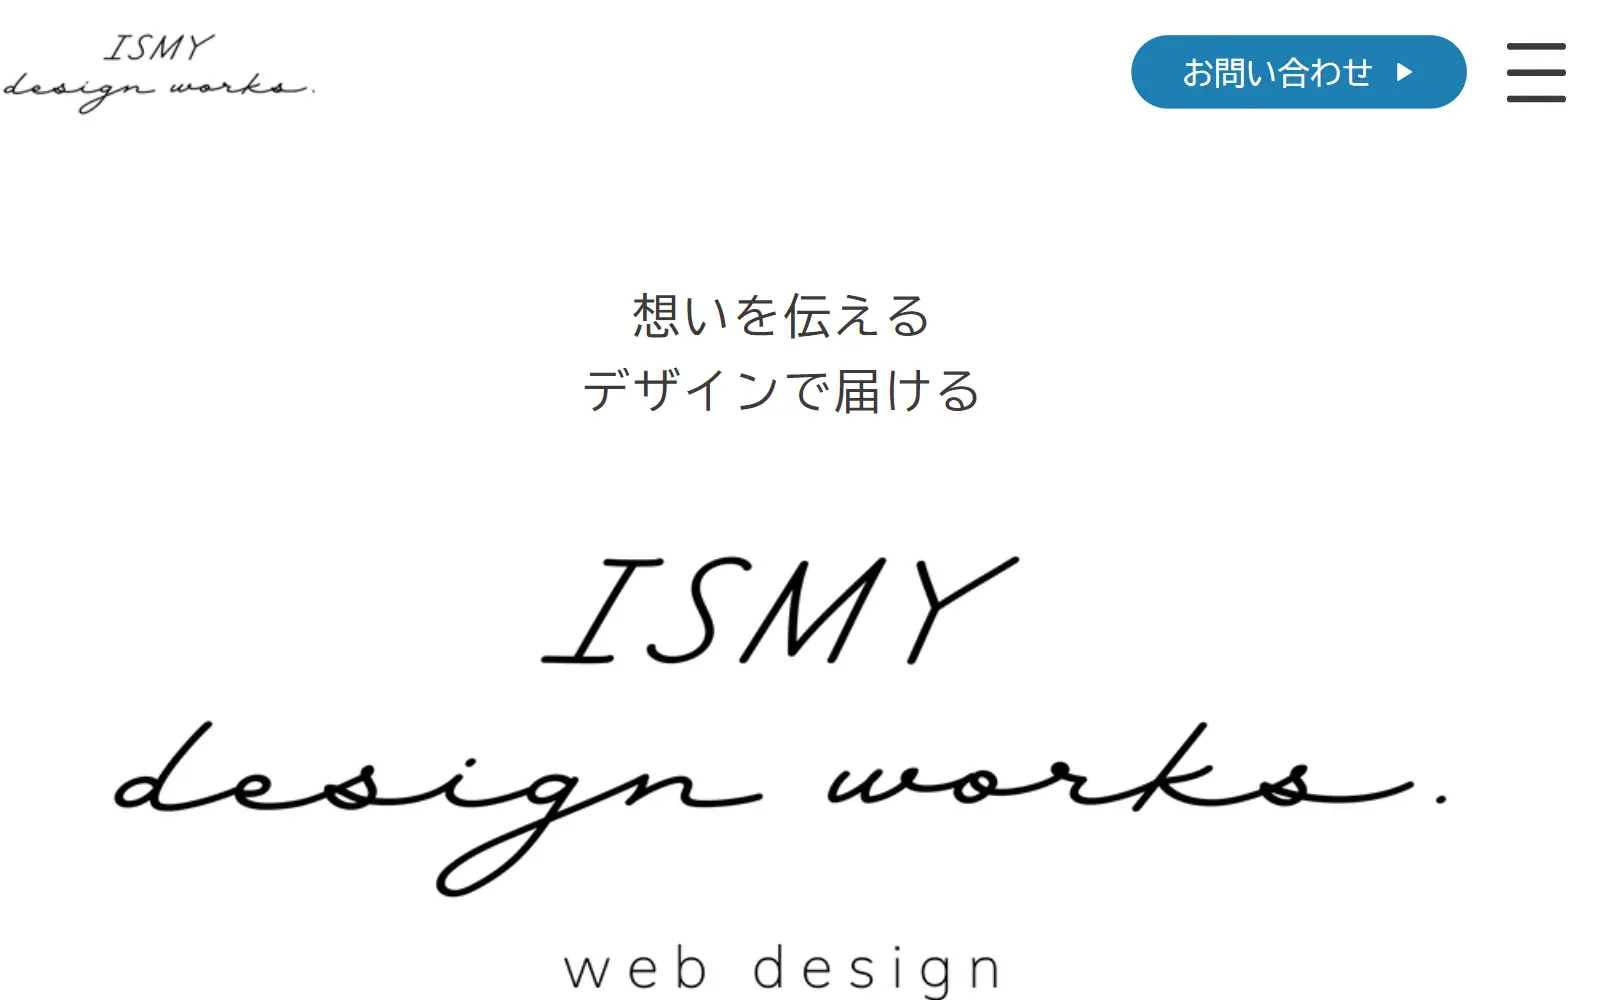 ISMY design works.